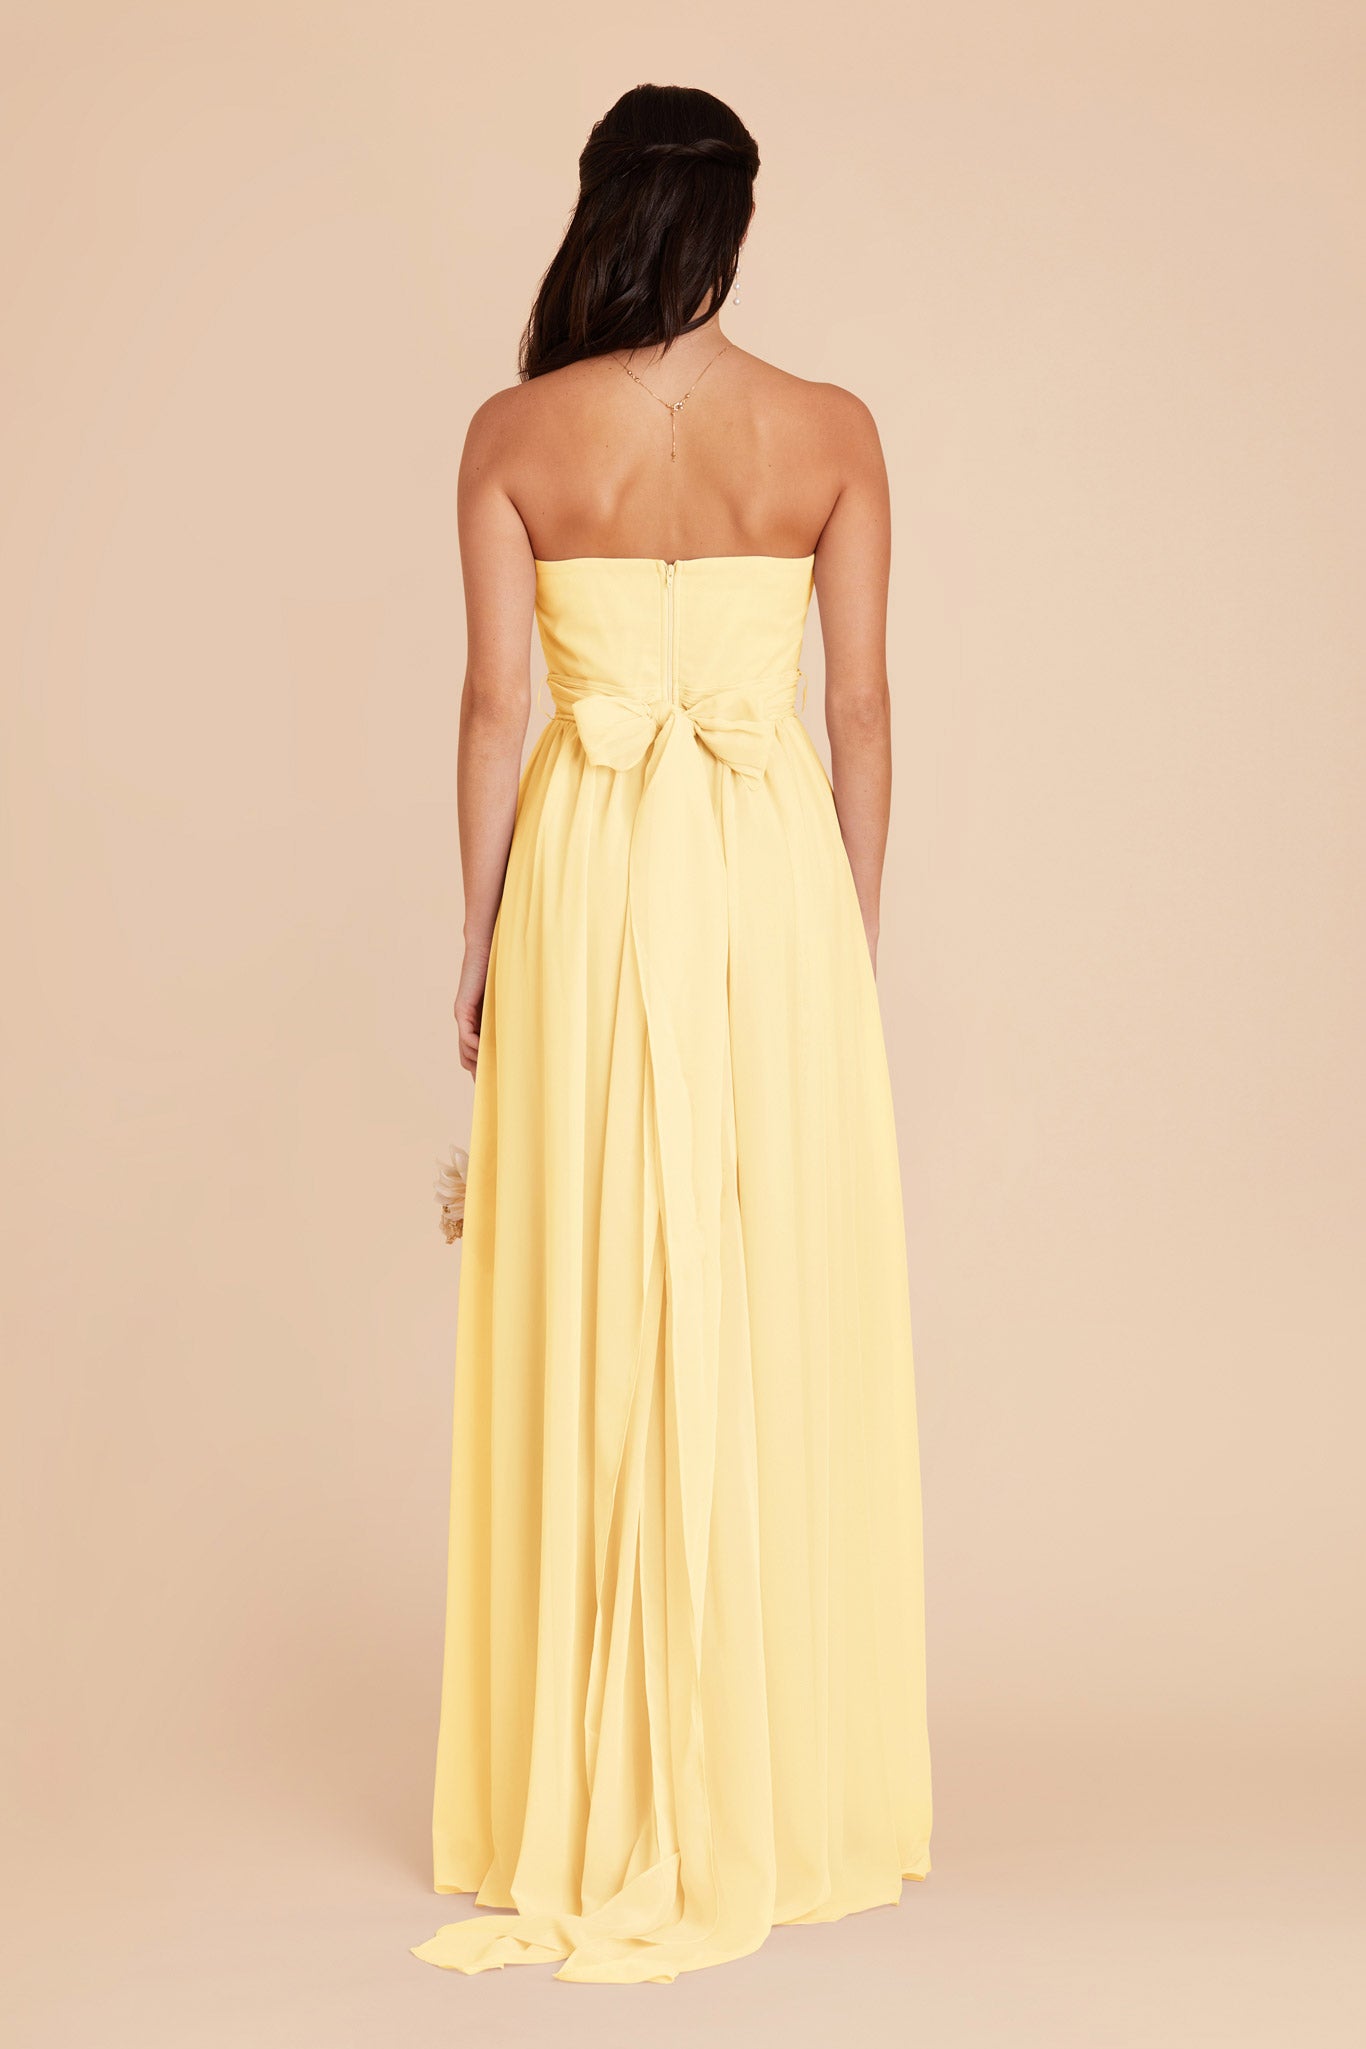  Lemon Sorbet Grace Convertible Dress by Birdy Grey